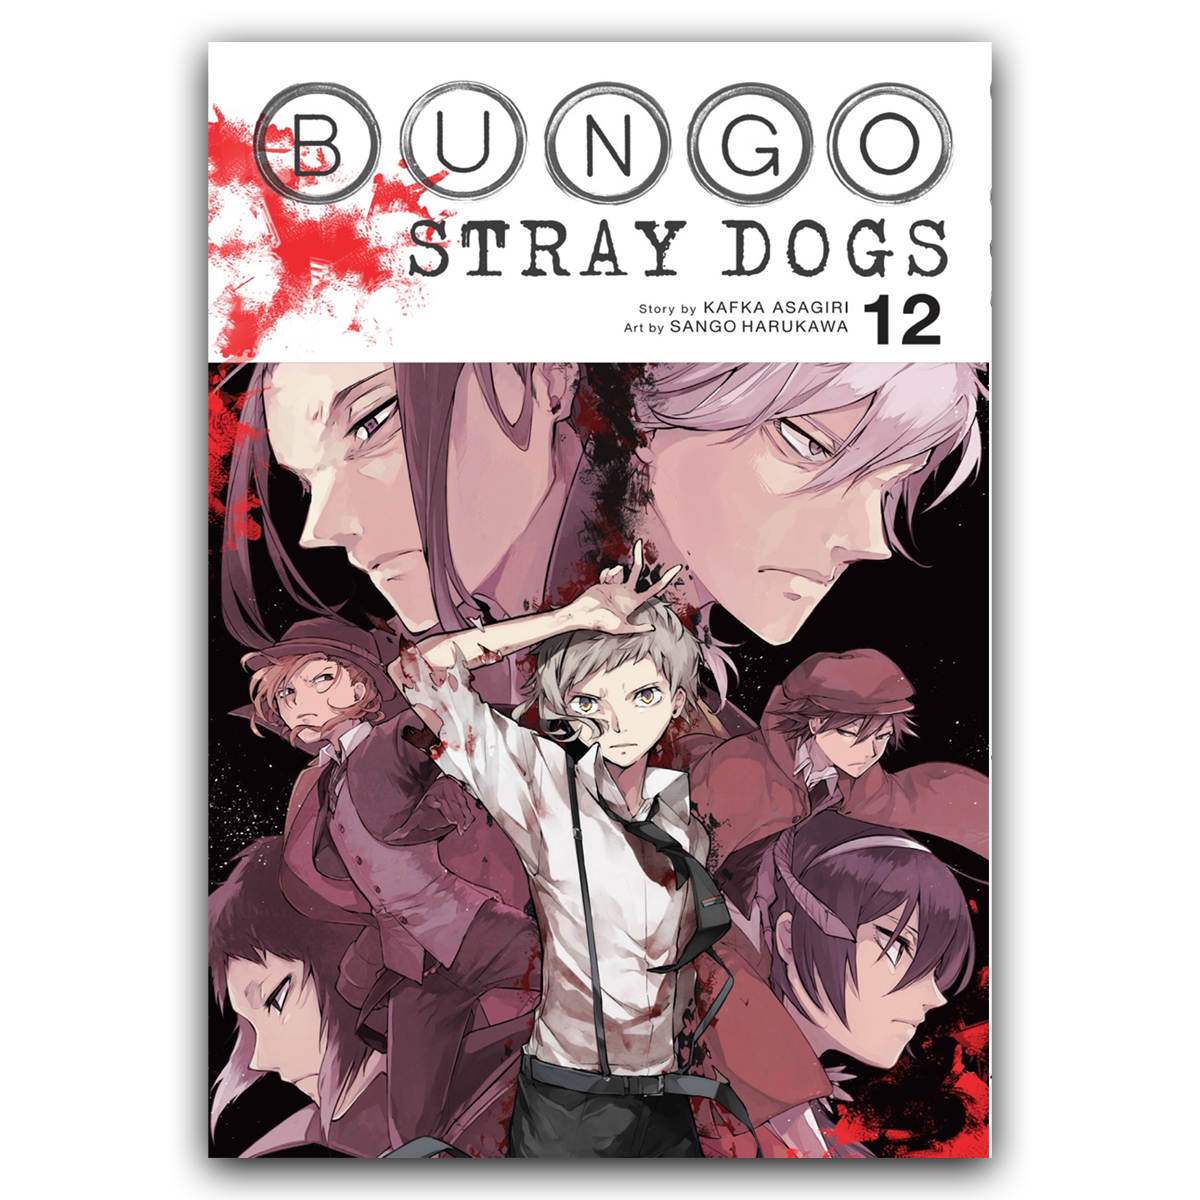  کتاب Bungo Stray Dogs 12 اثر Sango Harukawa and Kafka Asagiri نشر Yen Press